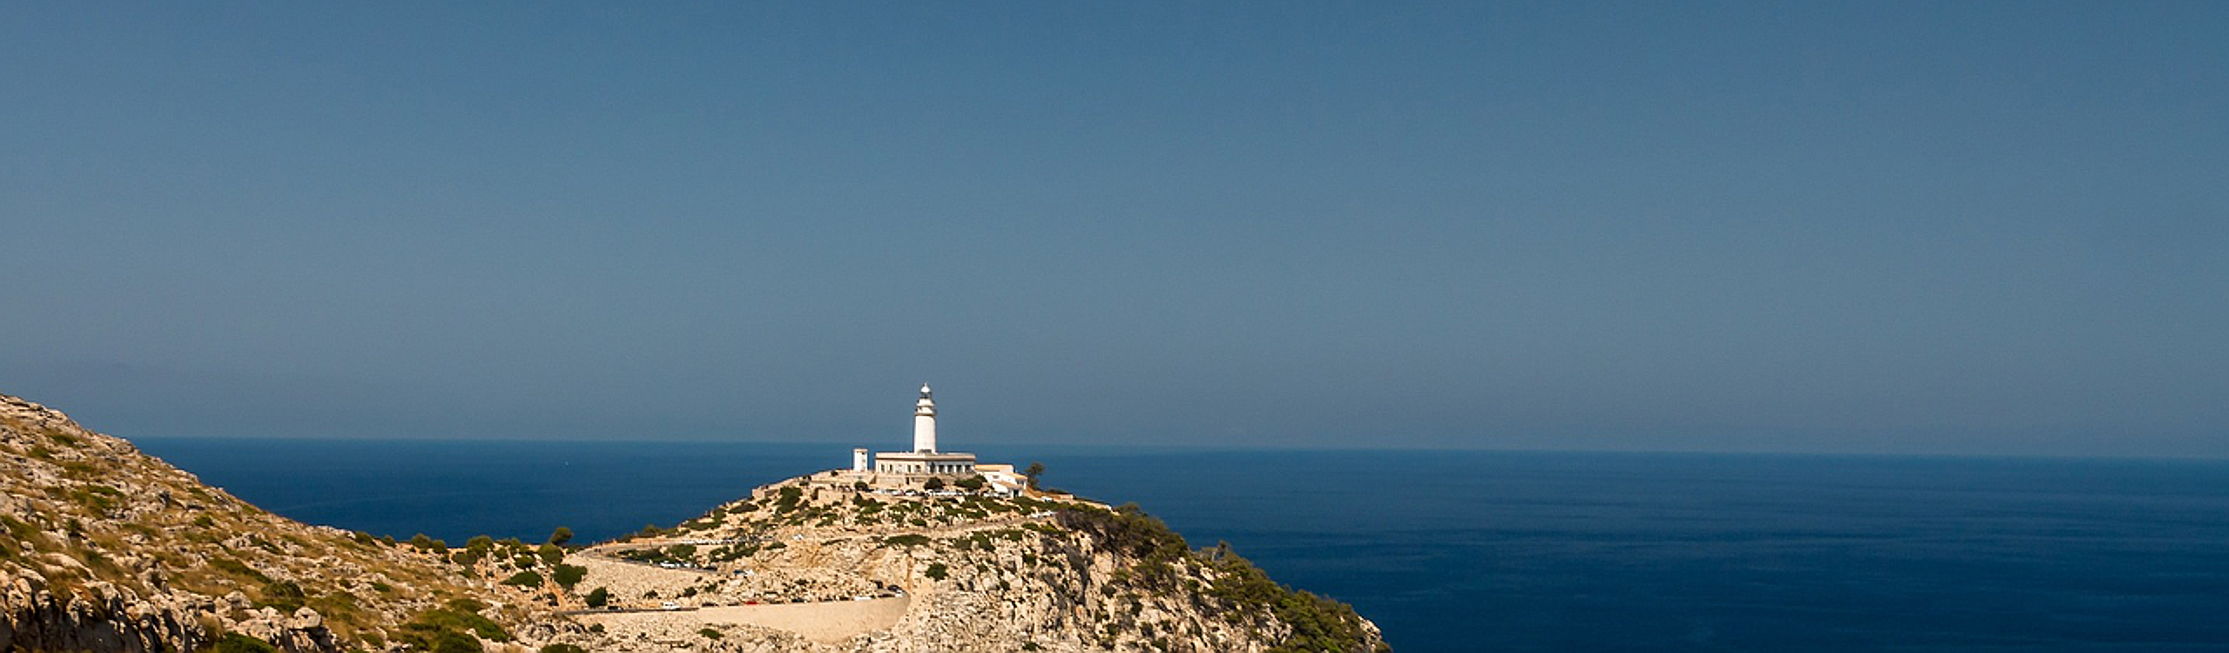  Islas Baleares
- Formentor